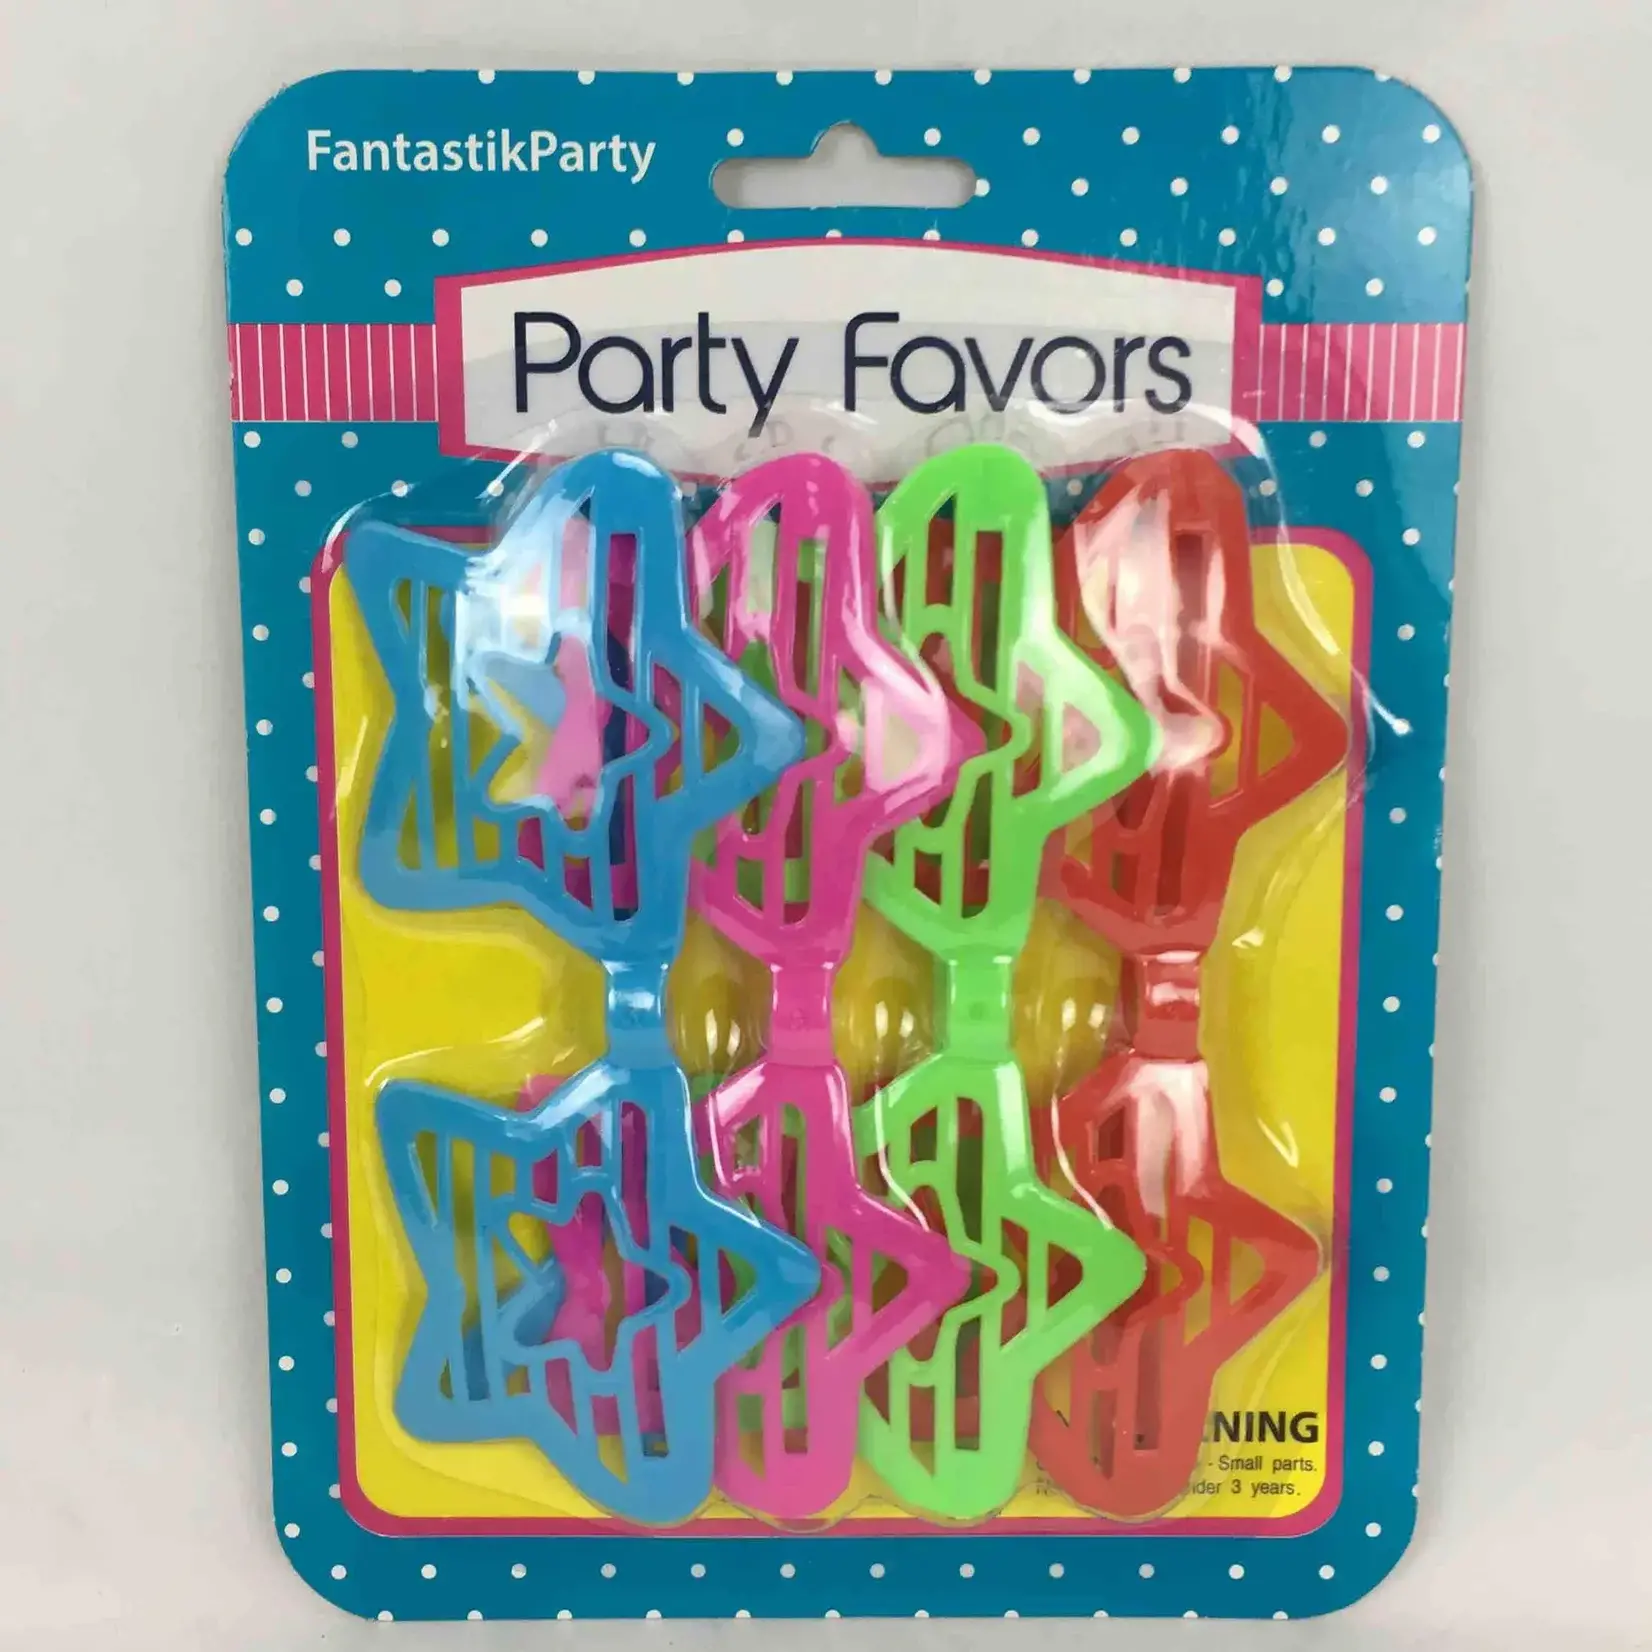 Party Favors - Party Glasses 4CT